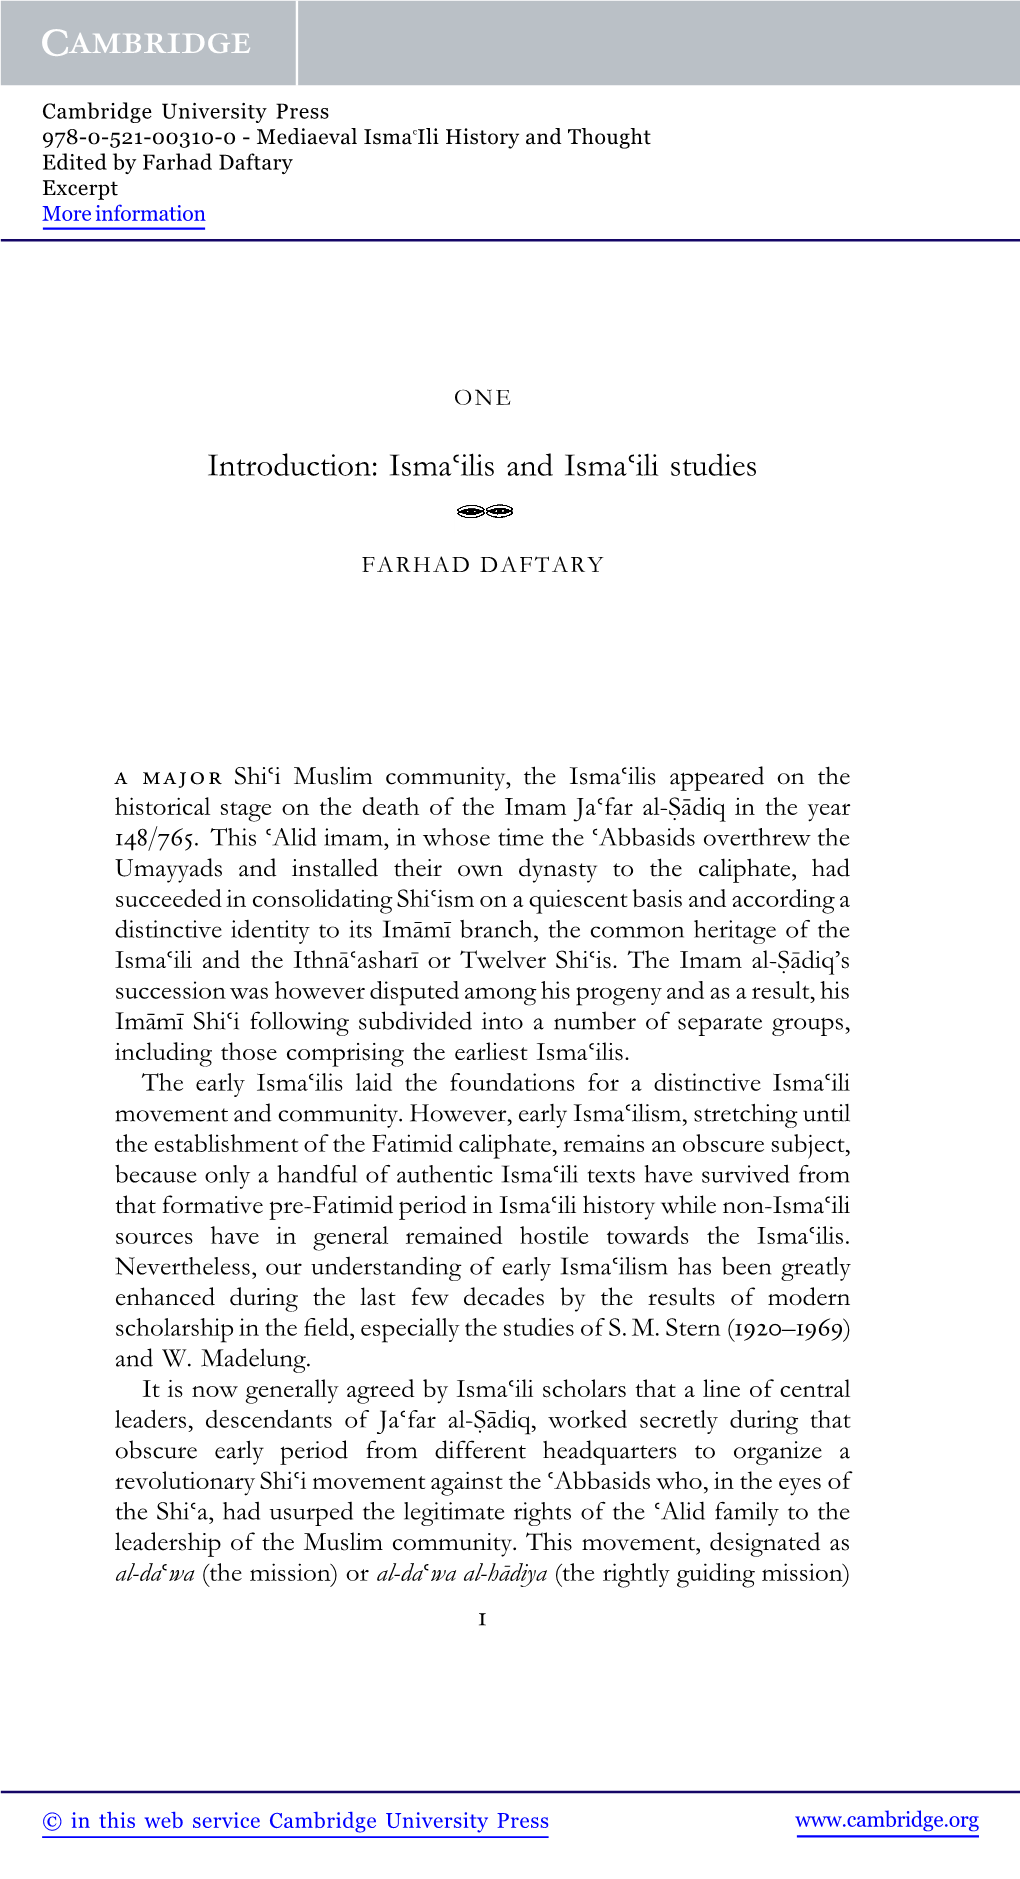 Introduction: Ismailis and Ismaili Studies